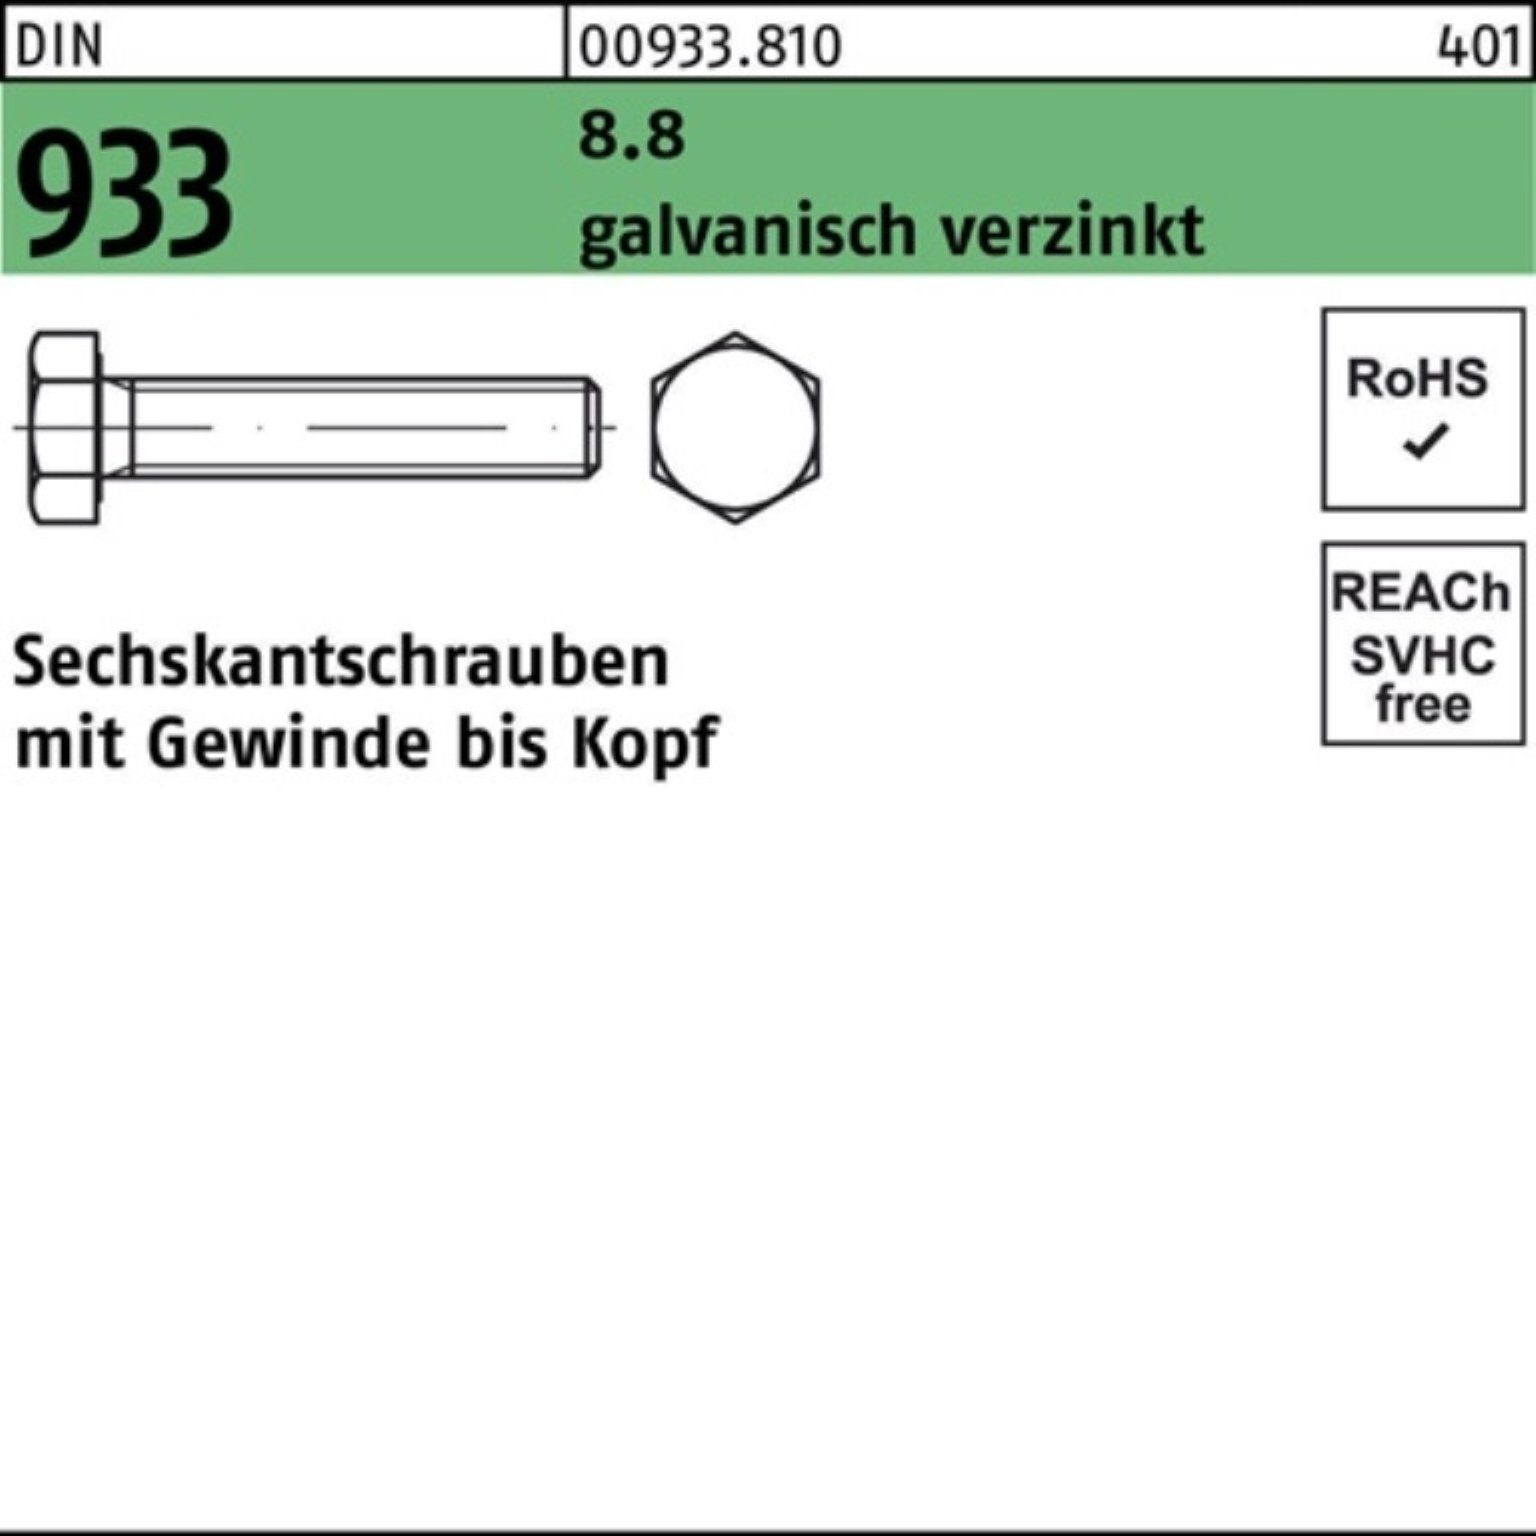 Reyher Sechskantschraube 200er 8.8 Stü DIN 45 200 Sechskantschraube 933 galv.verz. VG M5x Pack